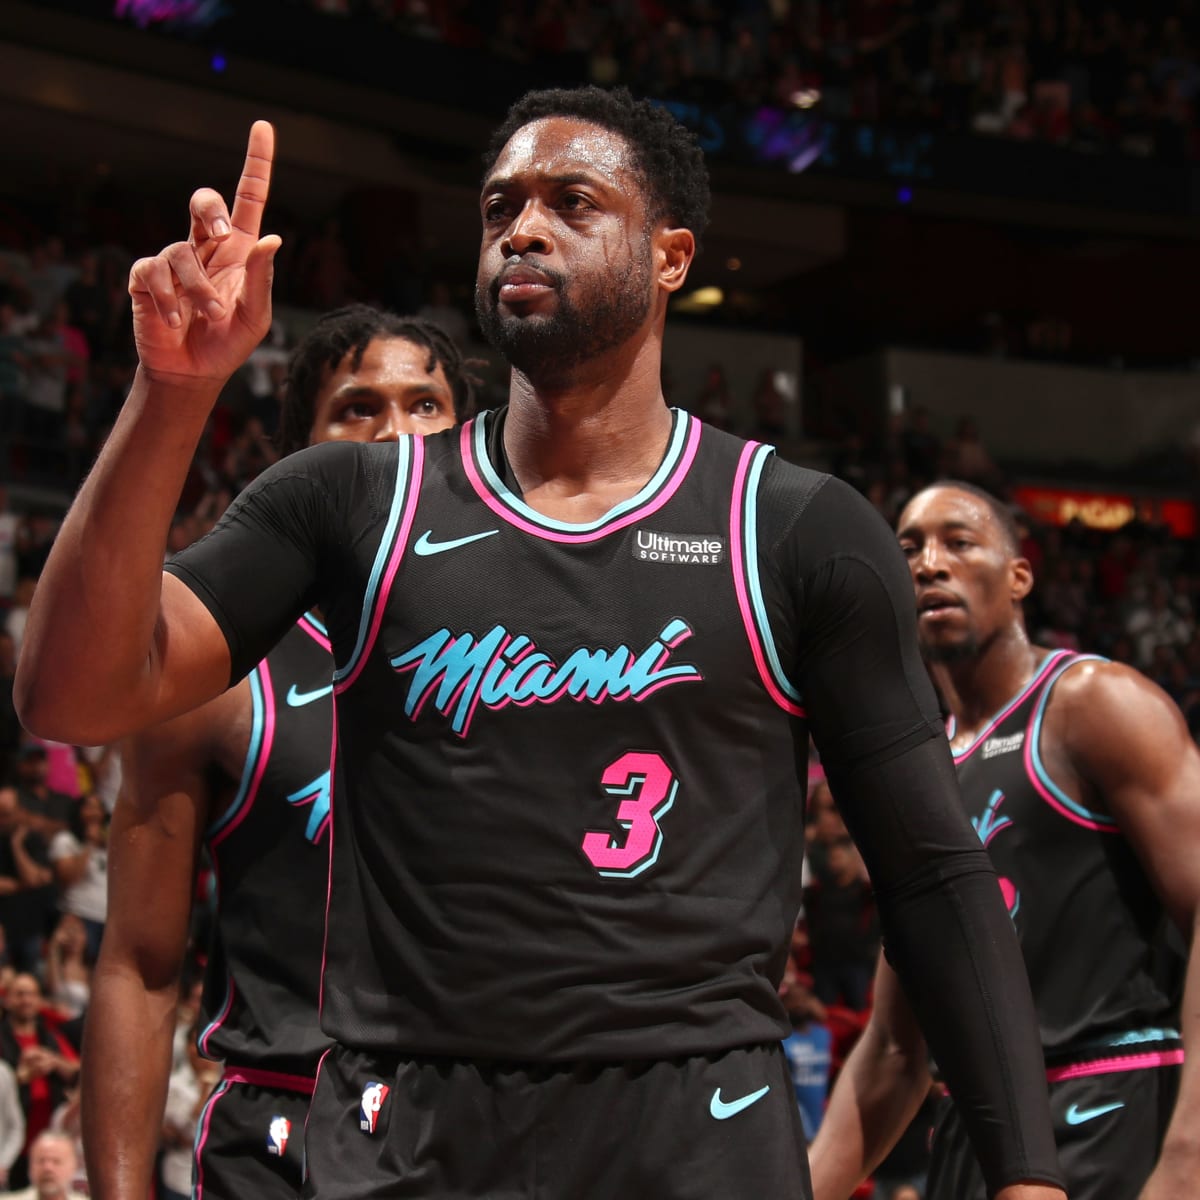 Miami Heat Announce 3-Day Celebration To Retire Dwyane Wade's Jersey